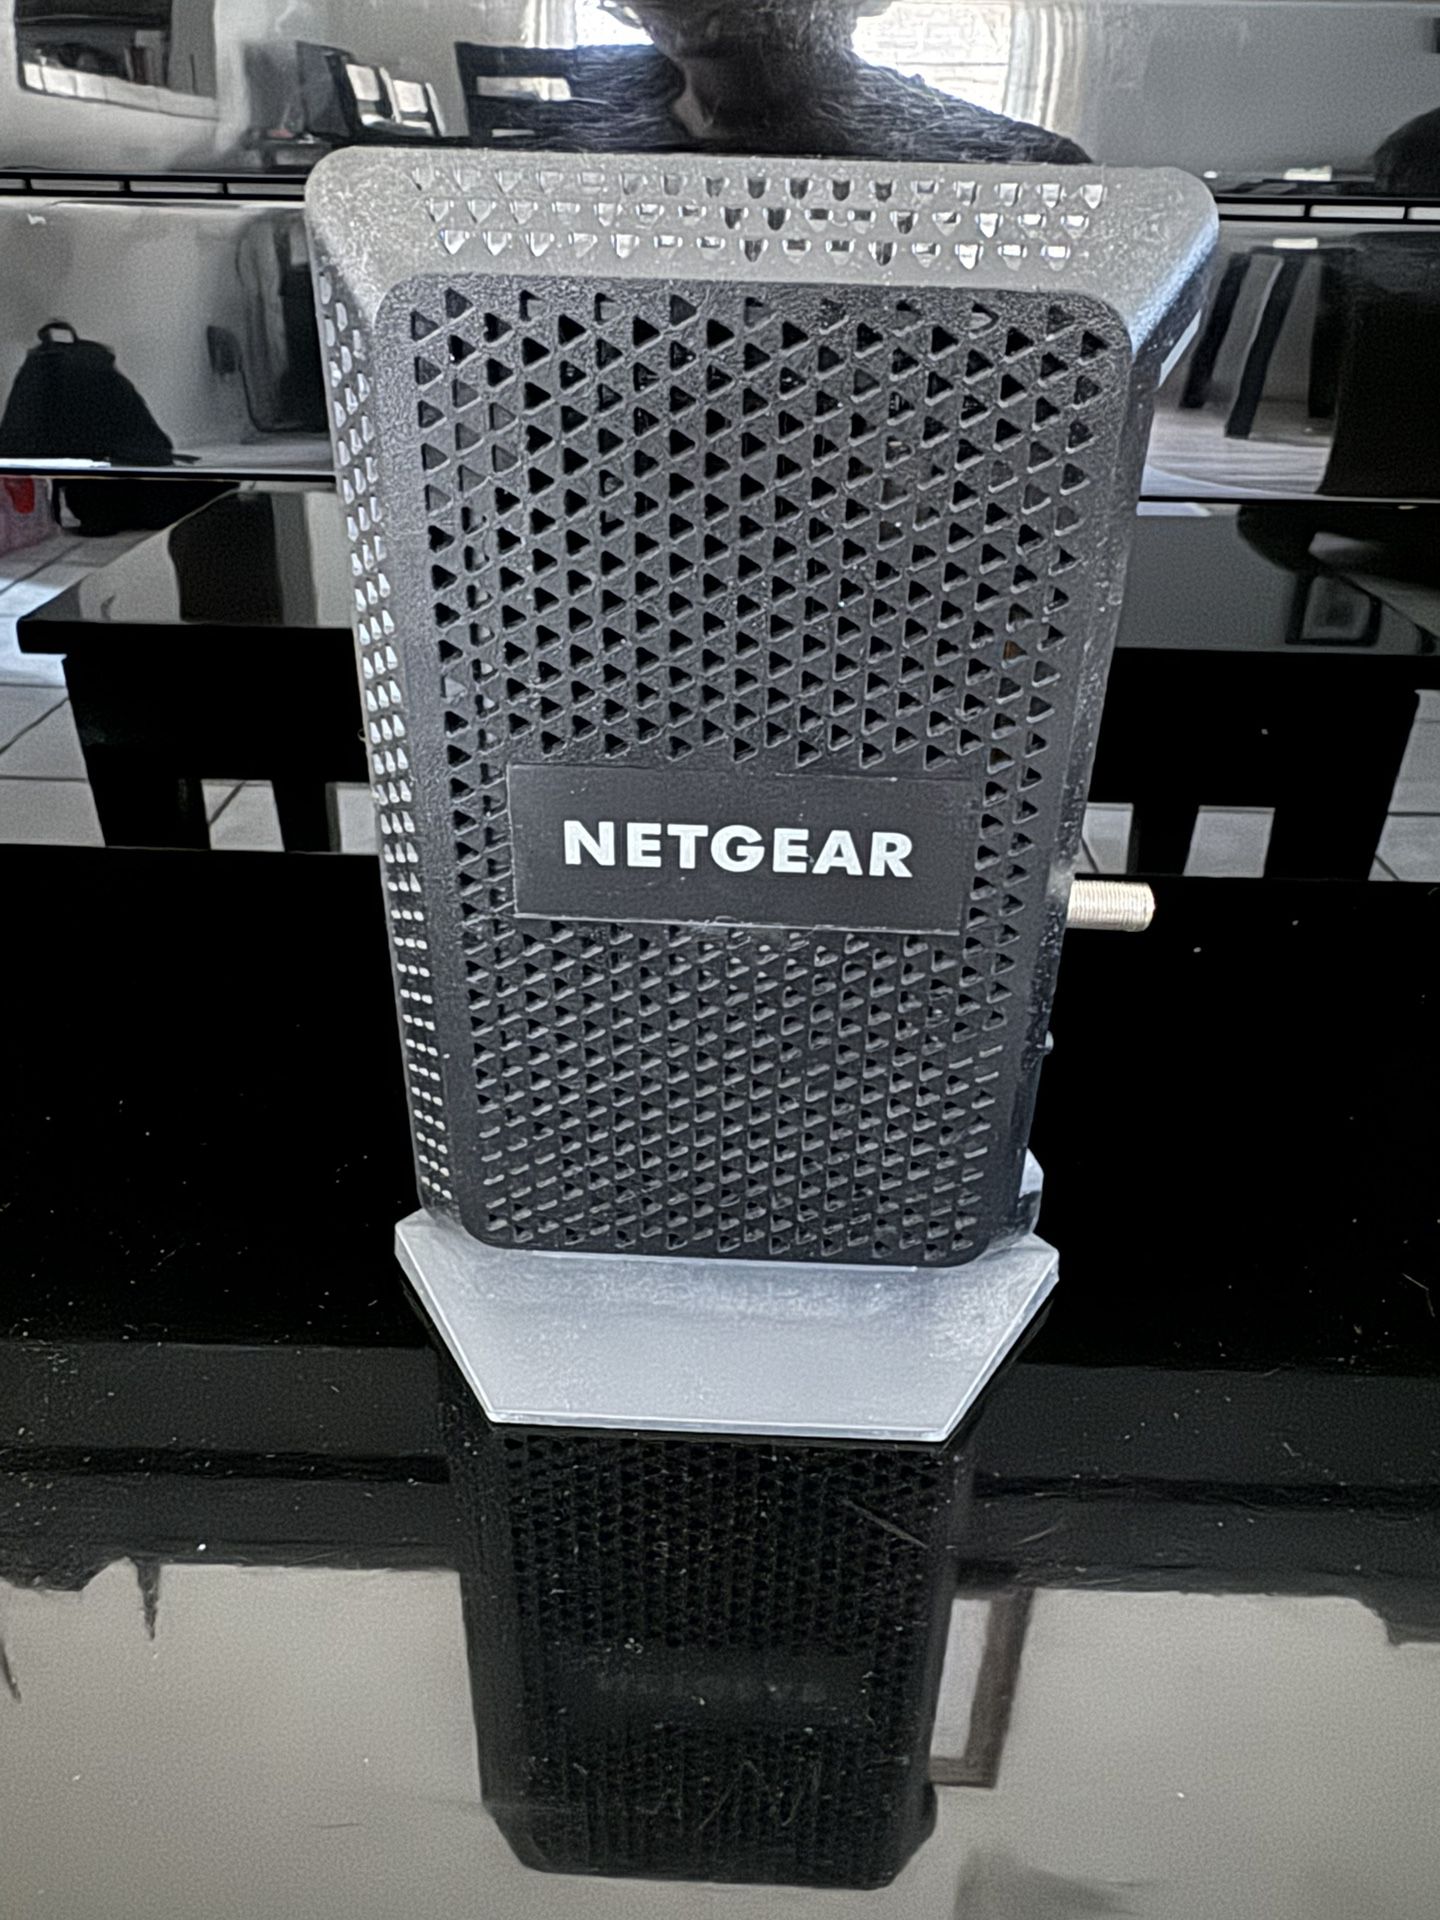 NETGEAR CM1100 DOCSIS 3.1 MODEM - LIKE BRAND NEW